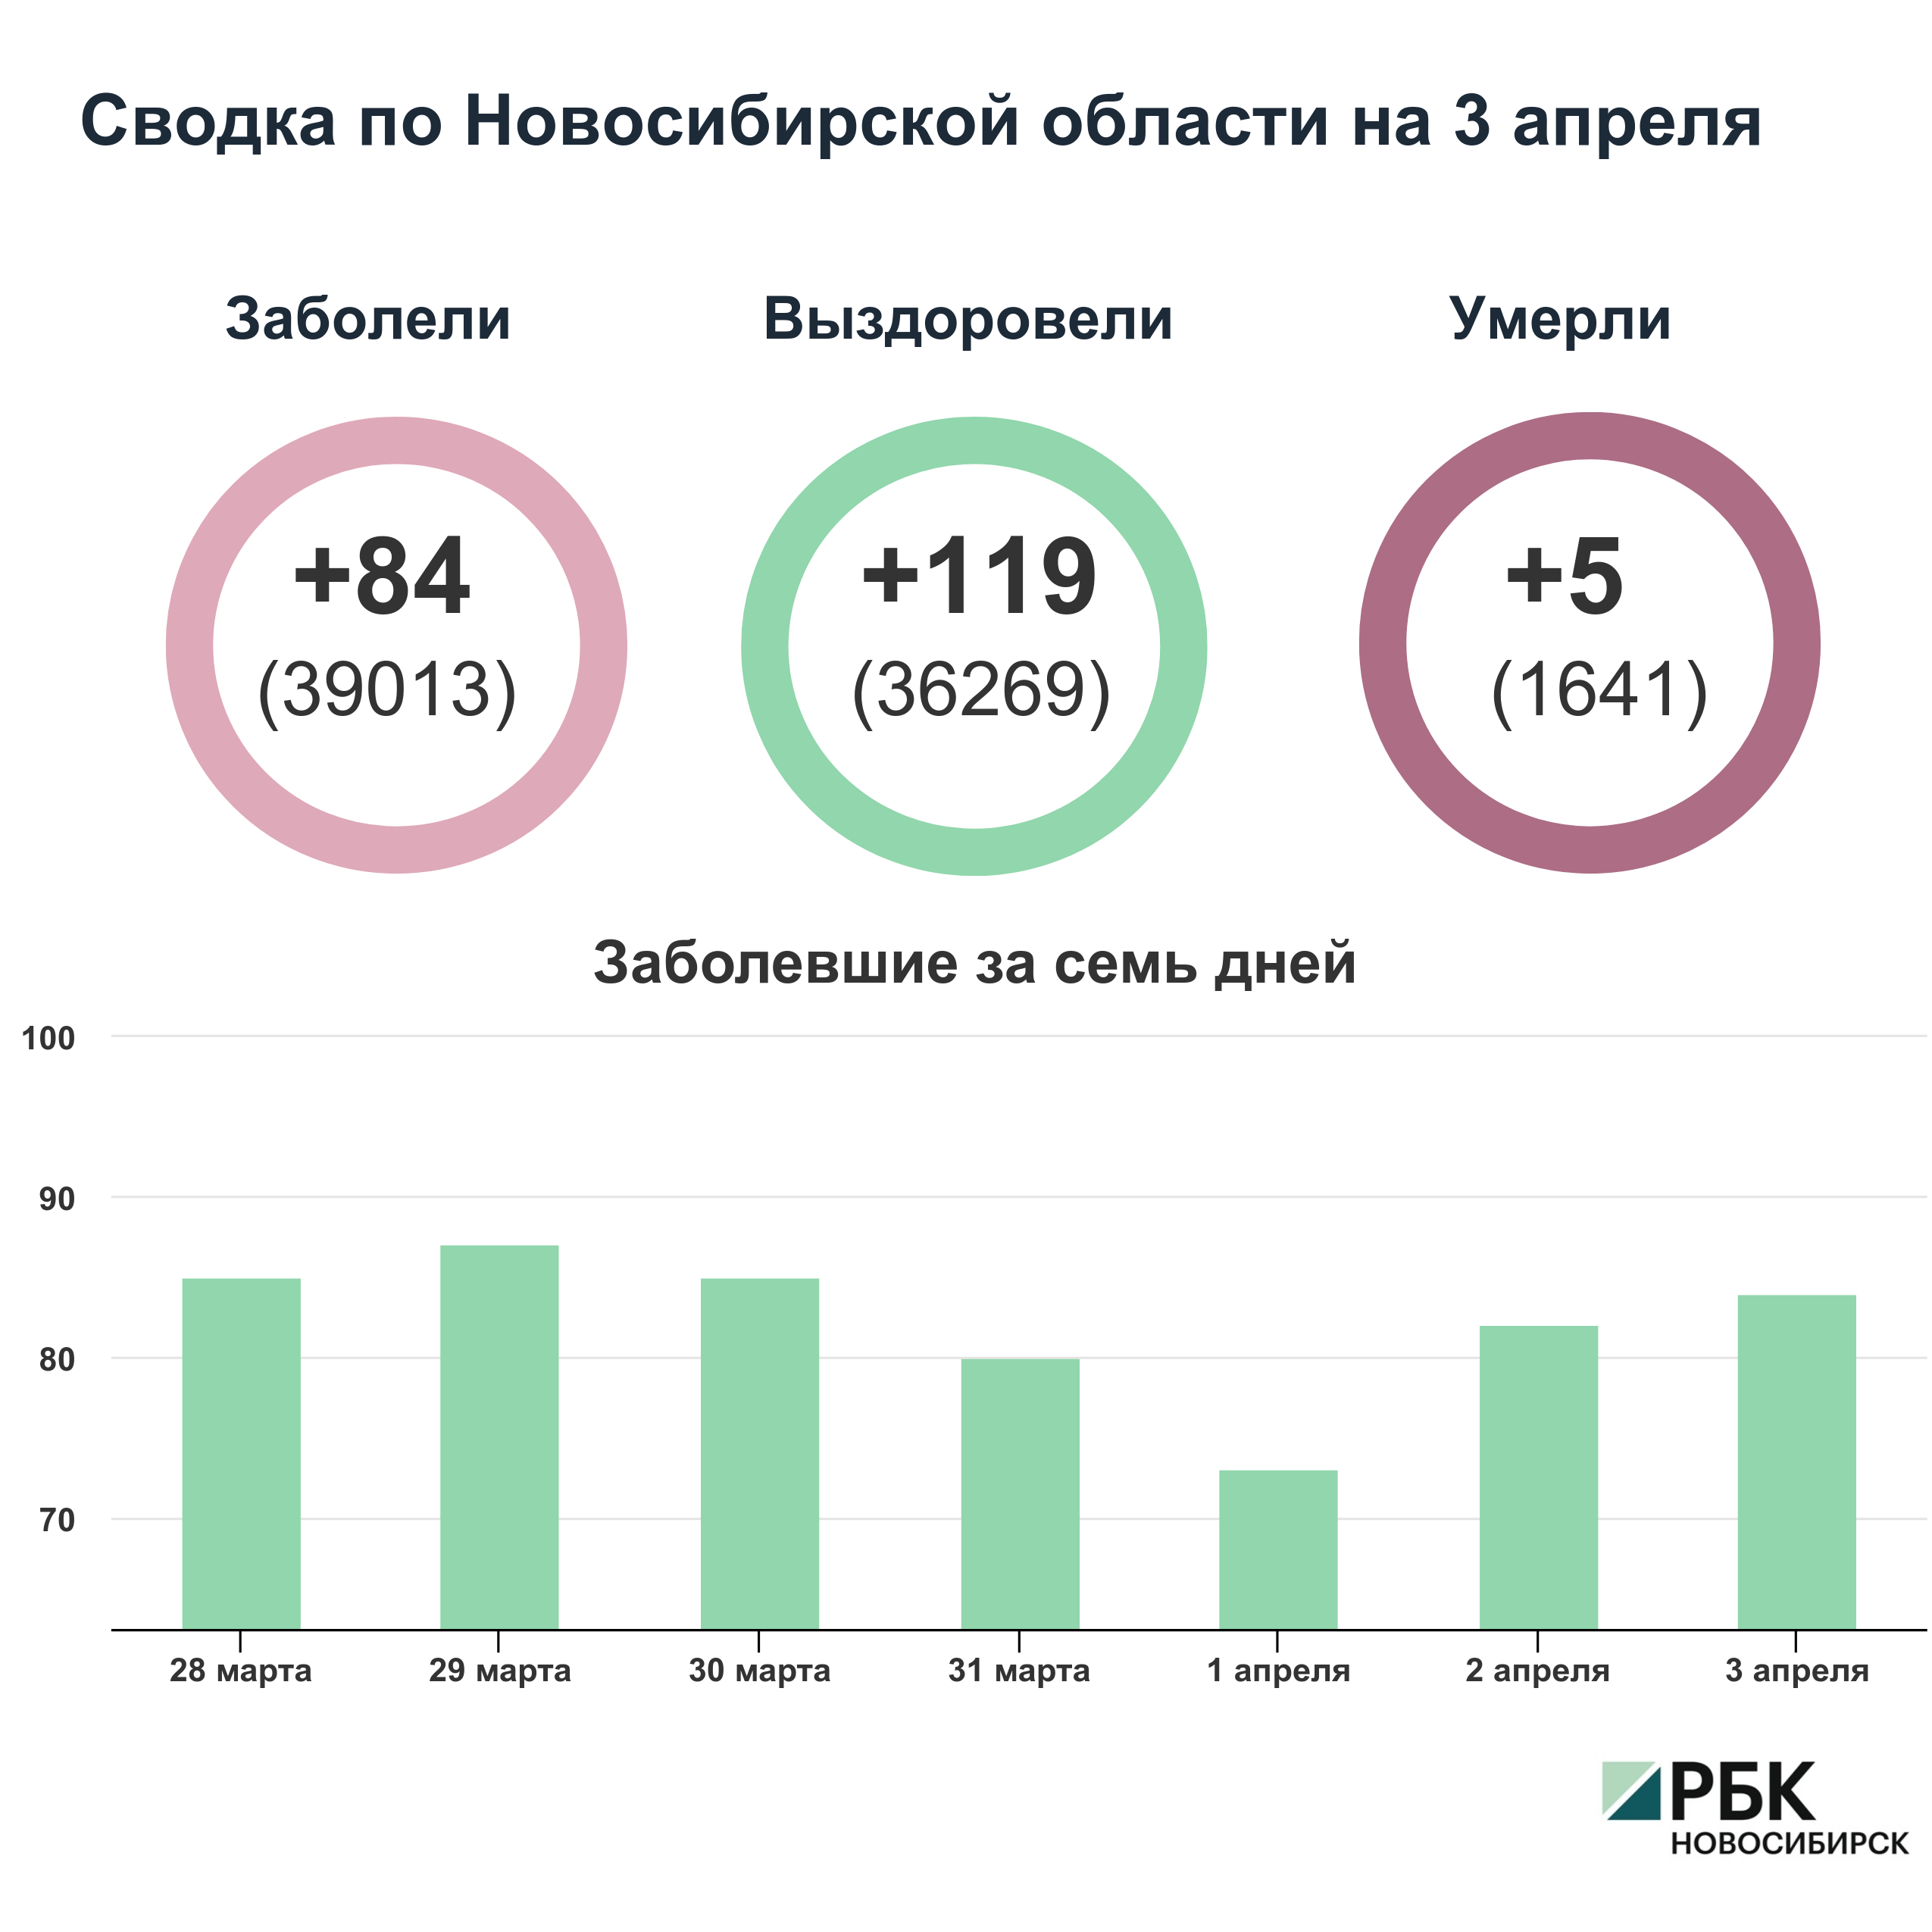 Коронавирус в Новосибирске: сводка на 3 апреля